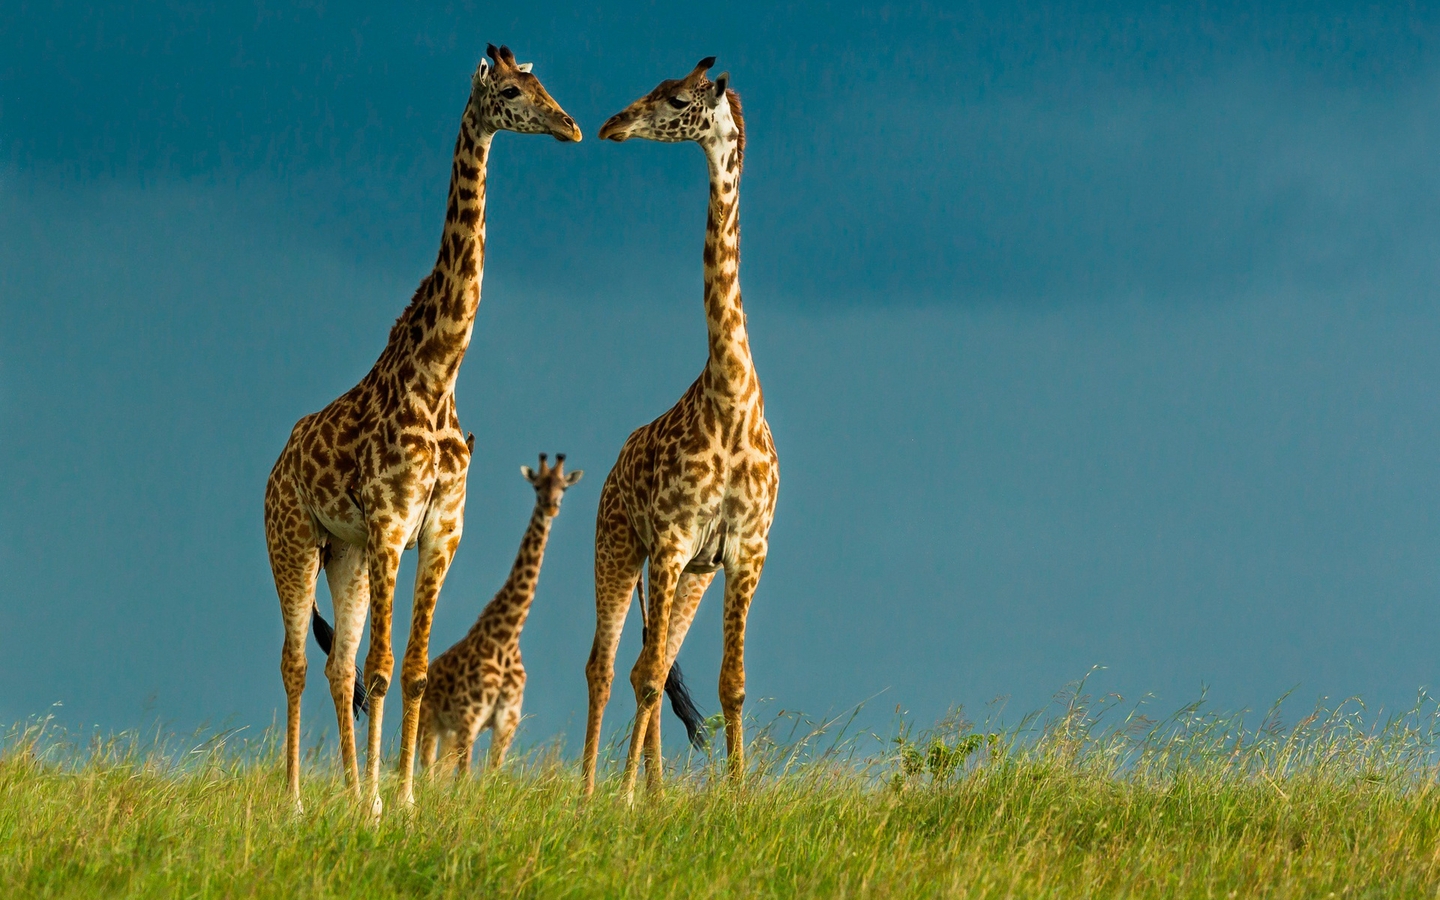 Картинка: Жирафы, длинная шея, Саванна, Африка, дикая природа, небо, трава